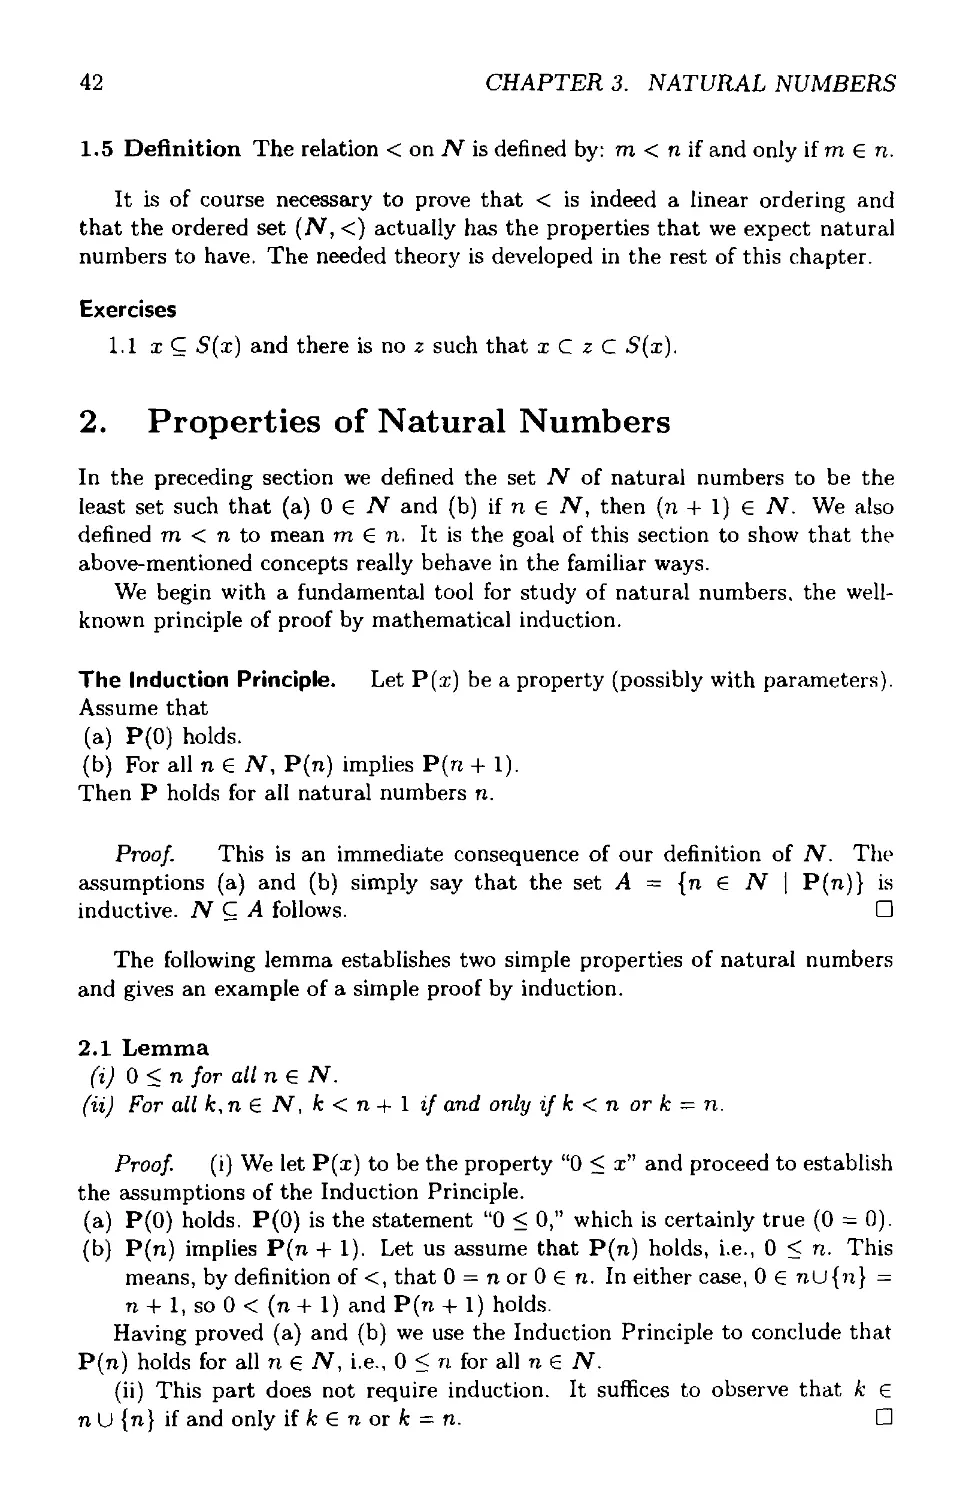 2 Properties of Natural Numbers